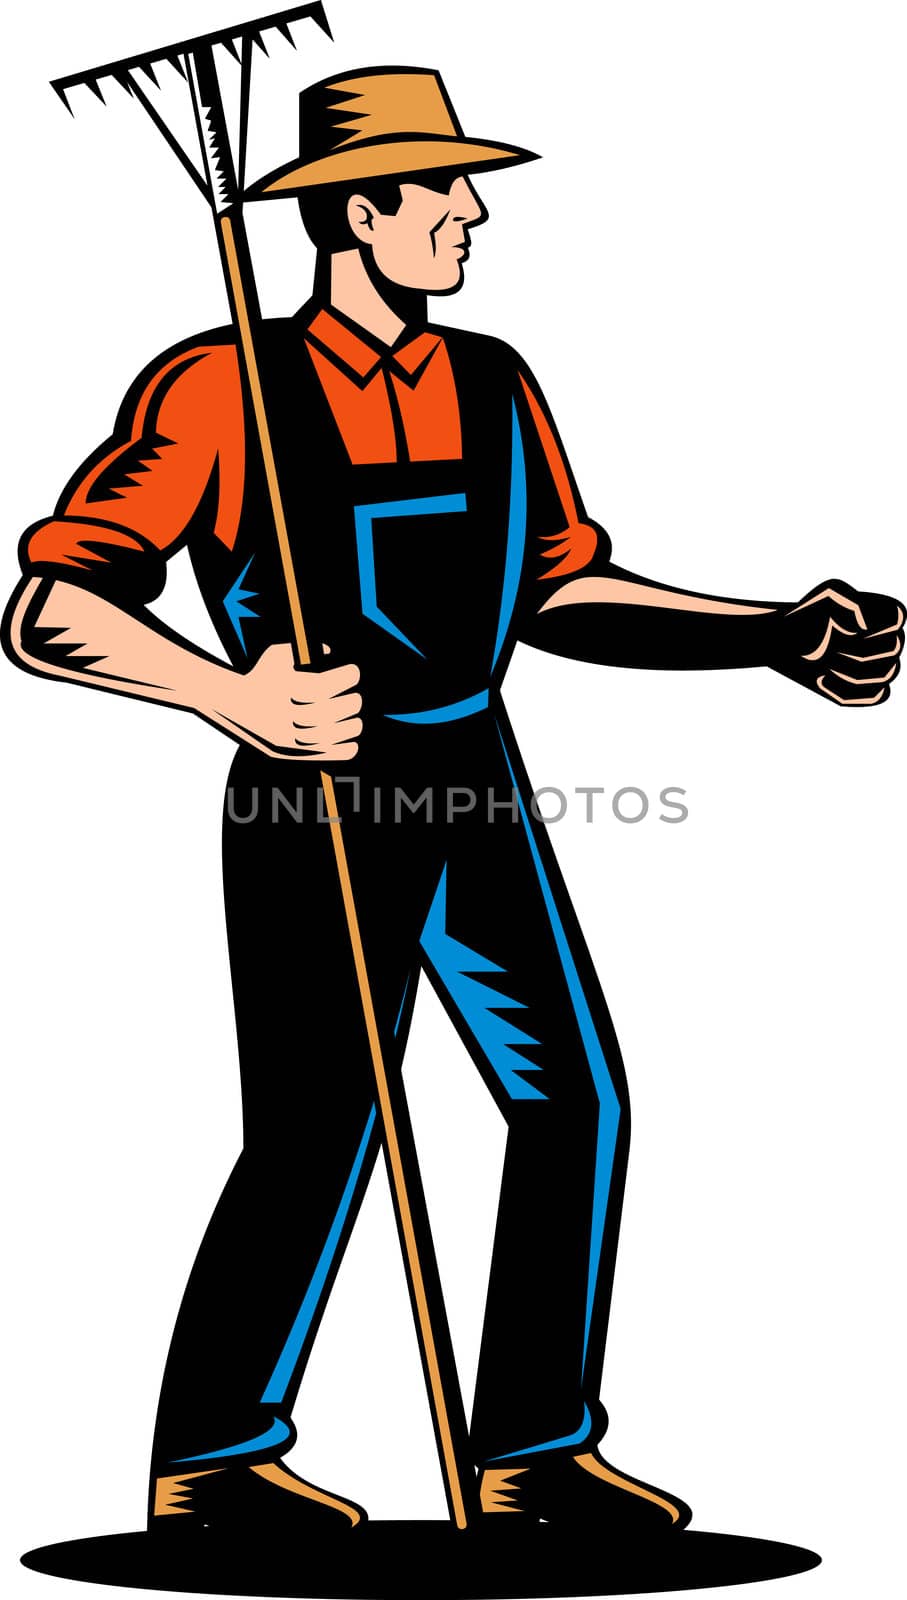 Farmer holding a rake by patrimonio